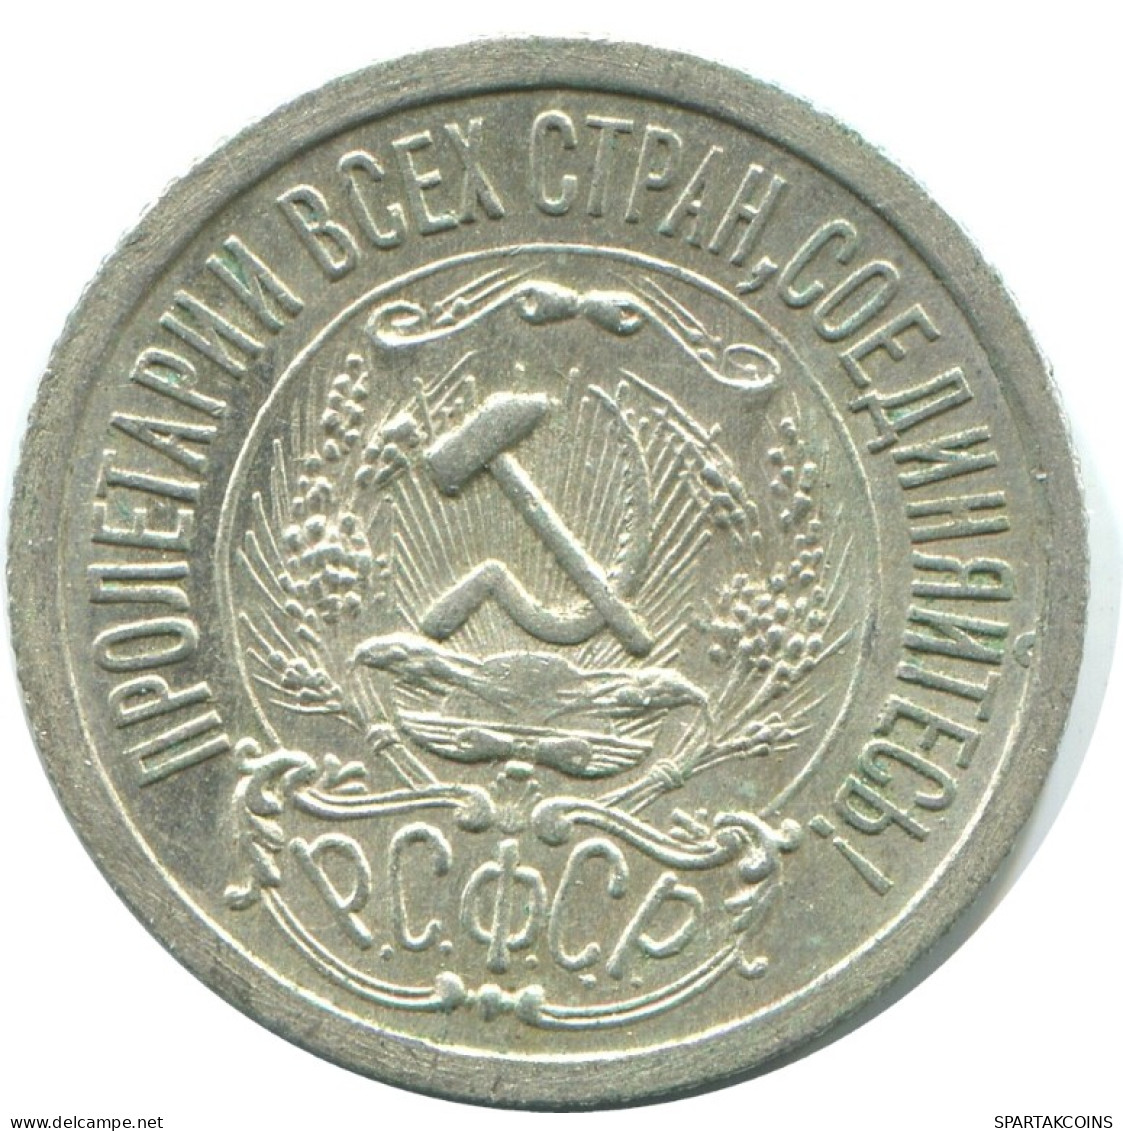 15 KOPEKS 1923 RUSSIA RSFSR SILVER Coin HIGH GRADE #AF059.4.U.A - Russia